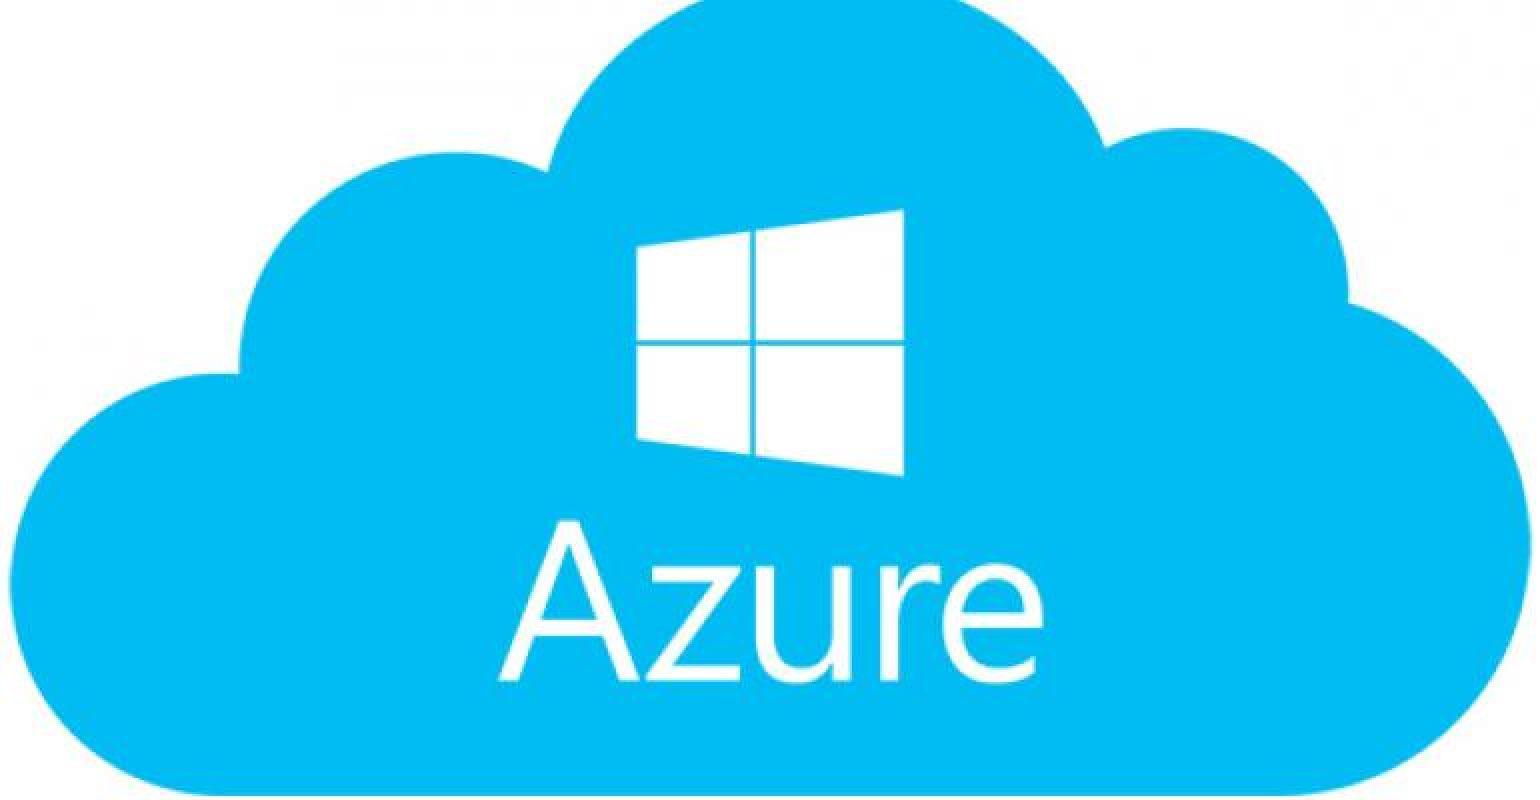 Microsoft Azure training for Beginners in Baltimore | Microsoft Azure Fundamentals | Azure cloud computing training | Microsoft Azure Fundamentals AZ-900 Certification Exam Prep (Preparation) Training Course